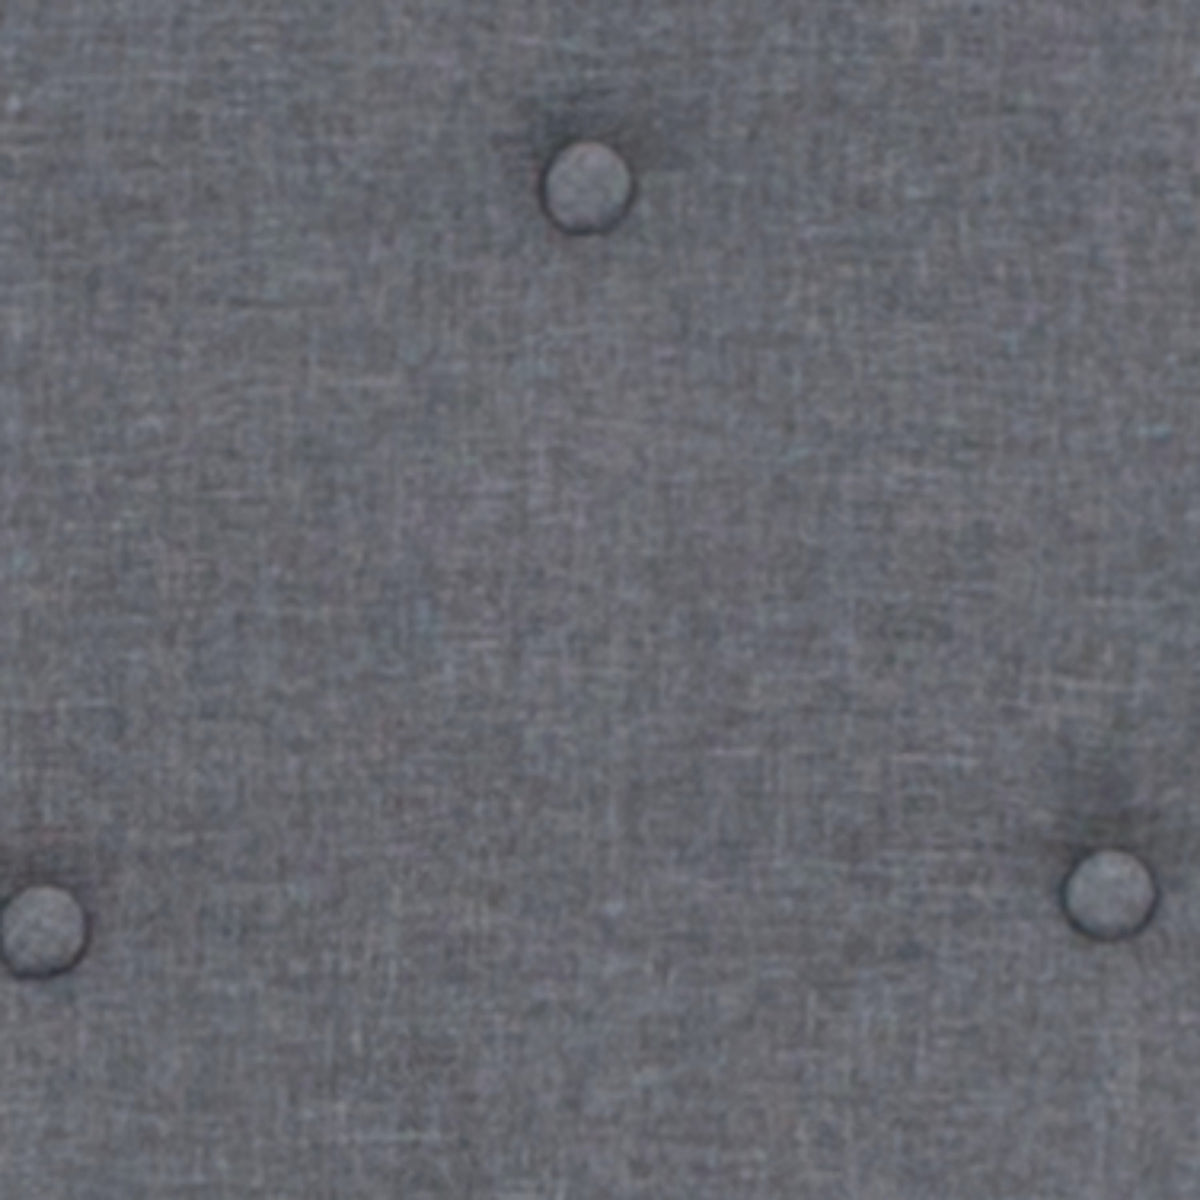 Light Gray,Twin |#| Twin Size Panel Tufted Light Gray Fabric Platform Bed with Memory Foam Mattress